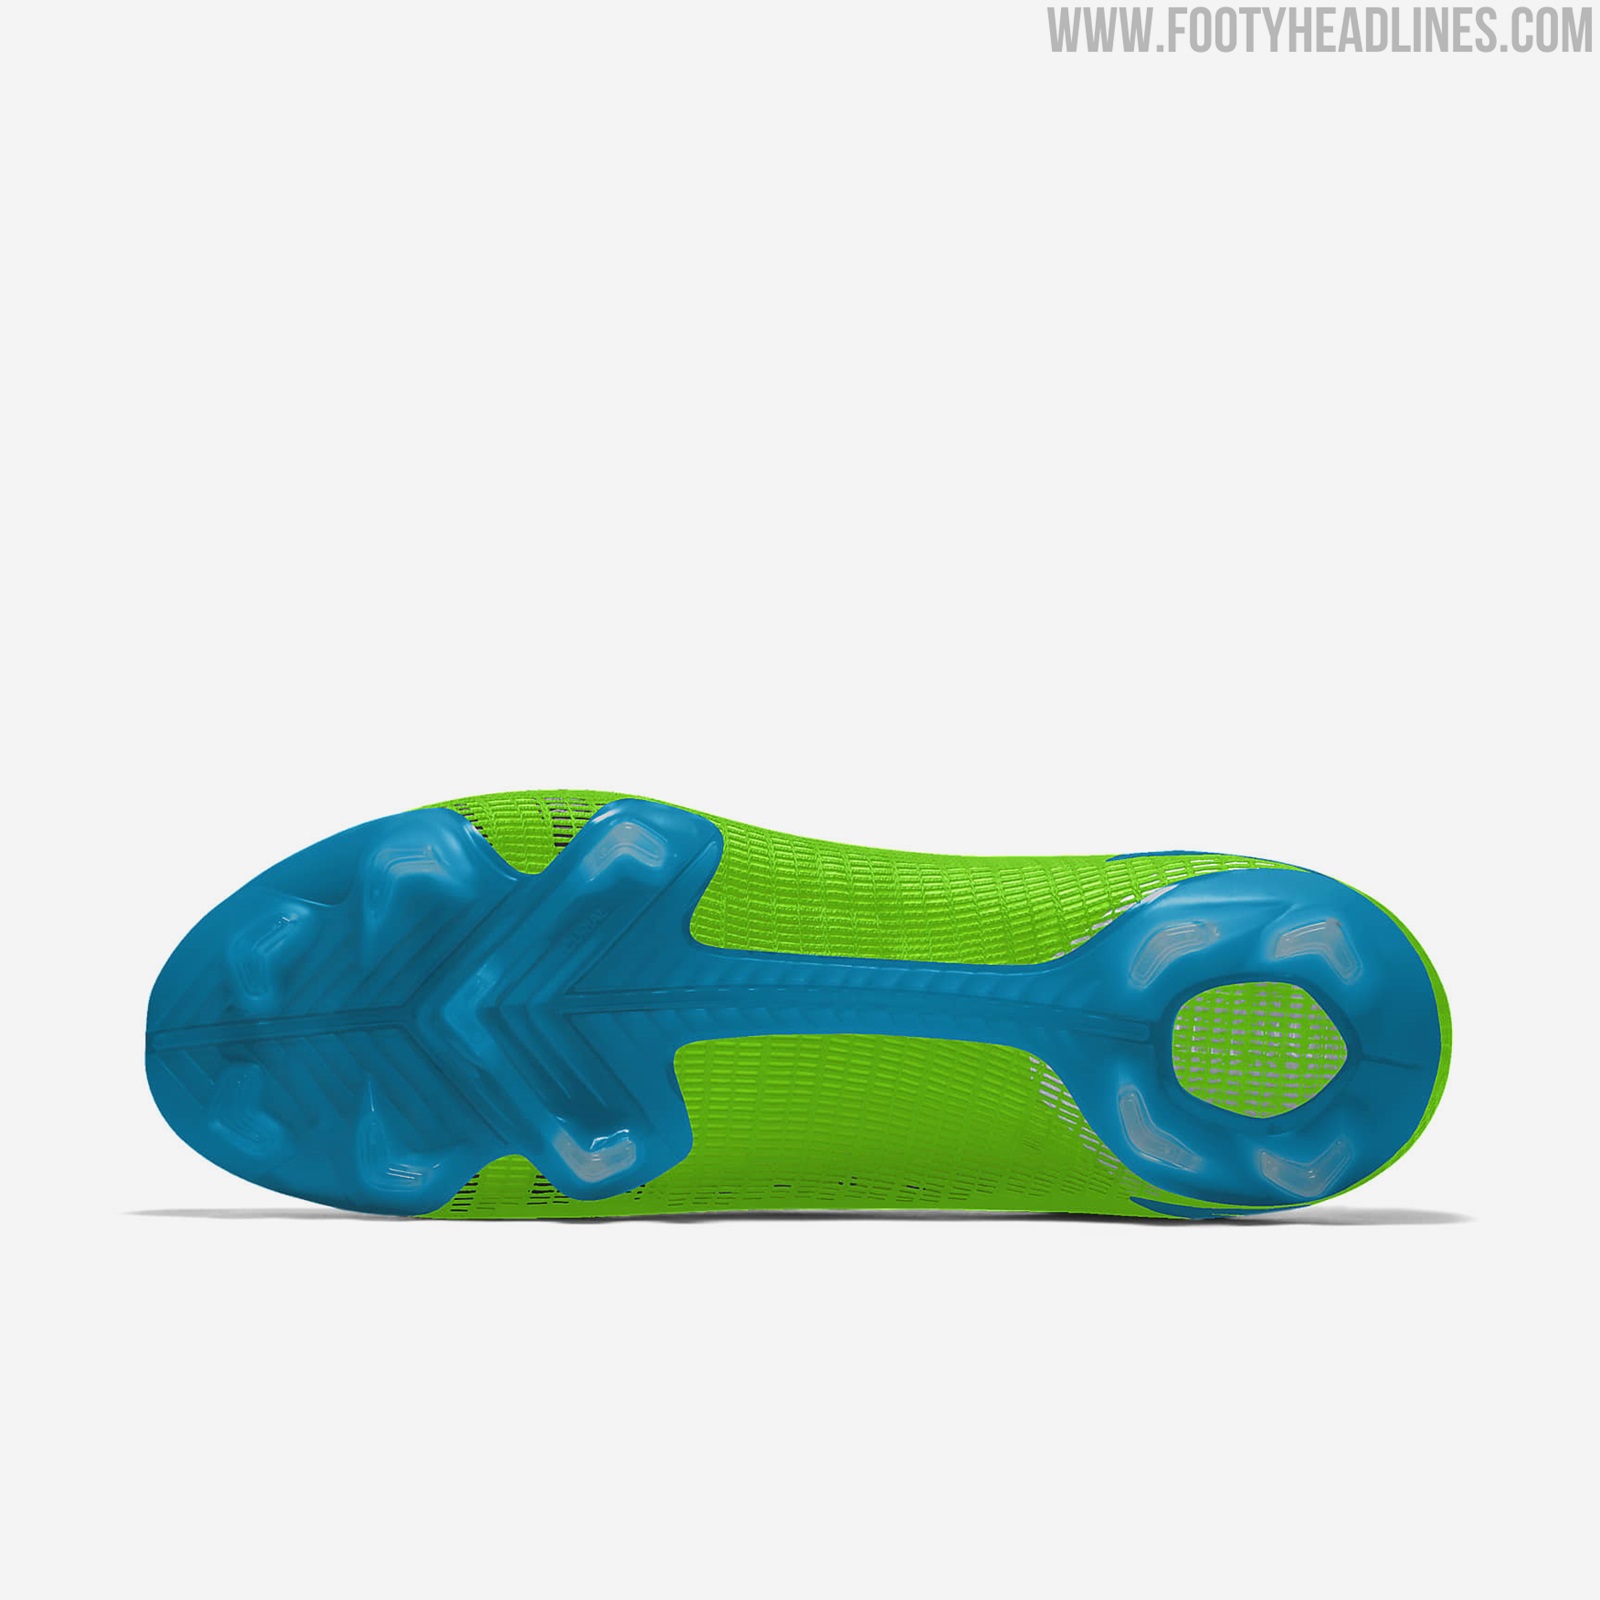 Customizable Next-Gen Nike Mercurial 2021 Boots Released - Footy Headlines